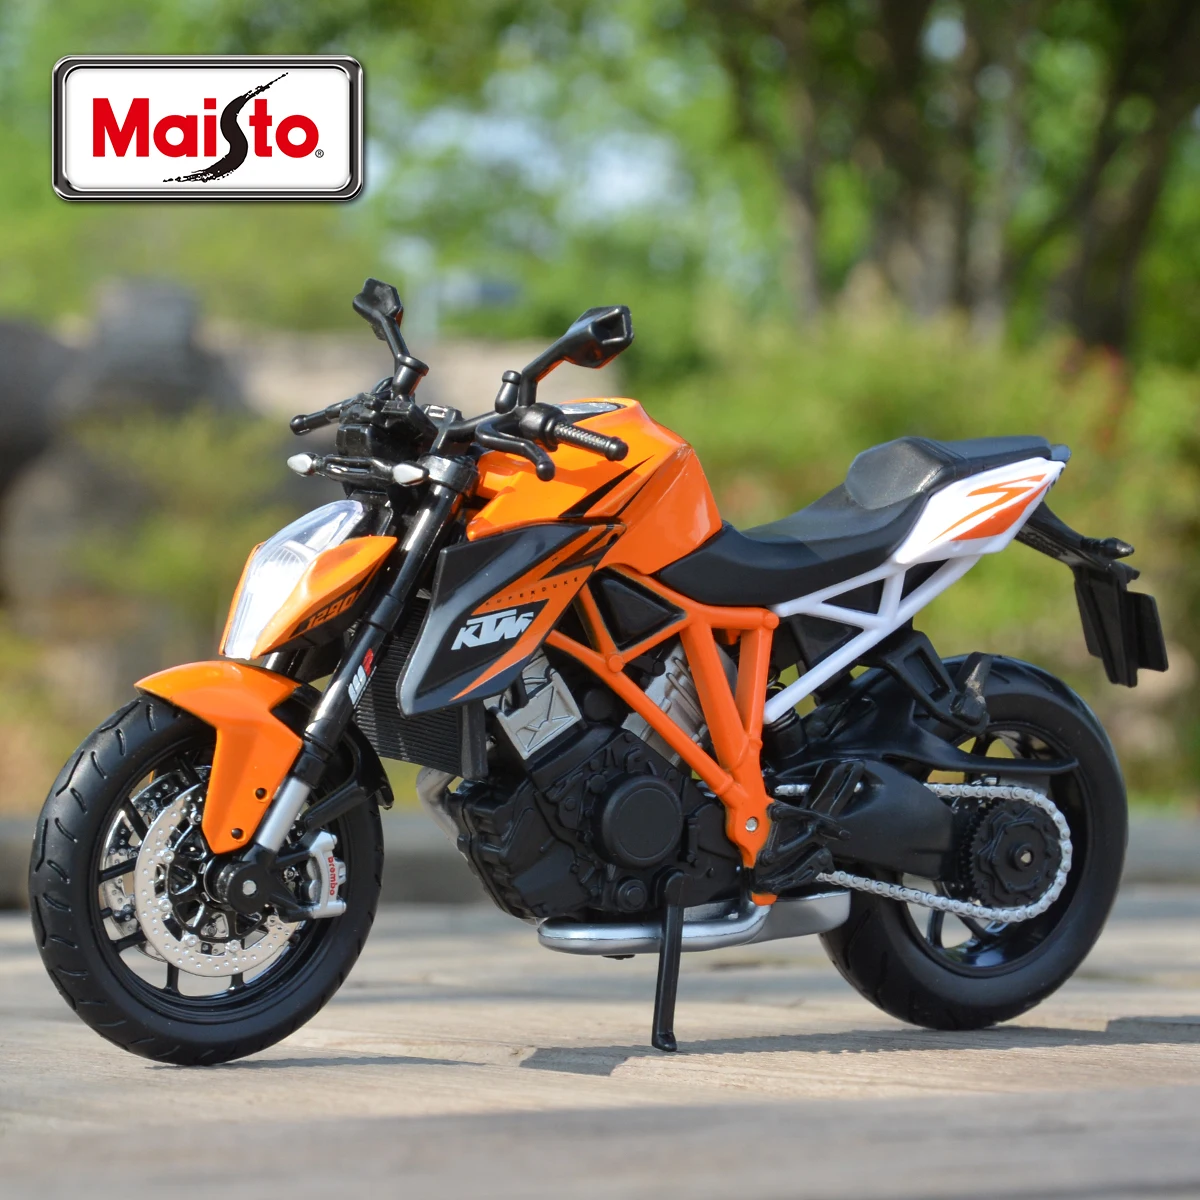 Collectable Diecast Maisto 1:12 KTM 1290 Super Duke R Orange Motorcycle Model 